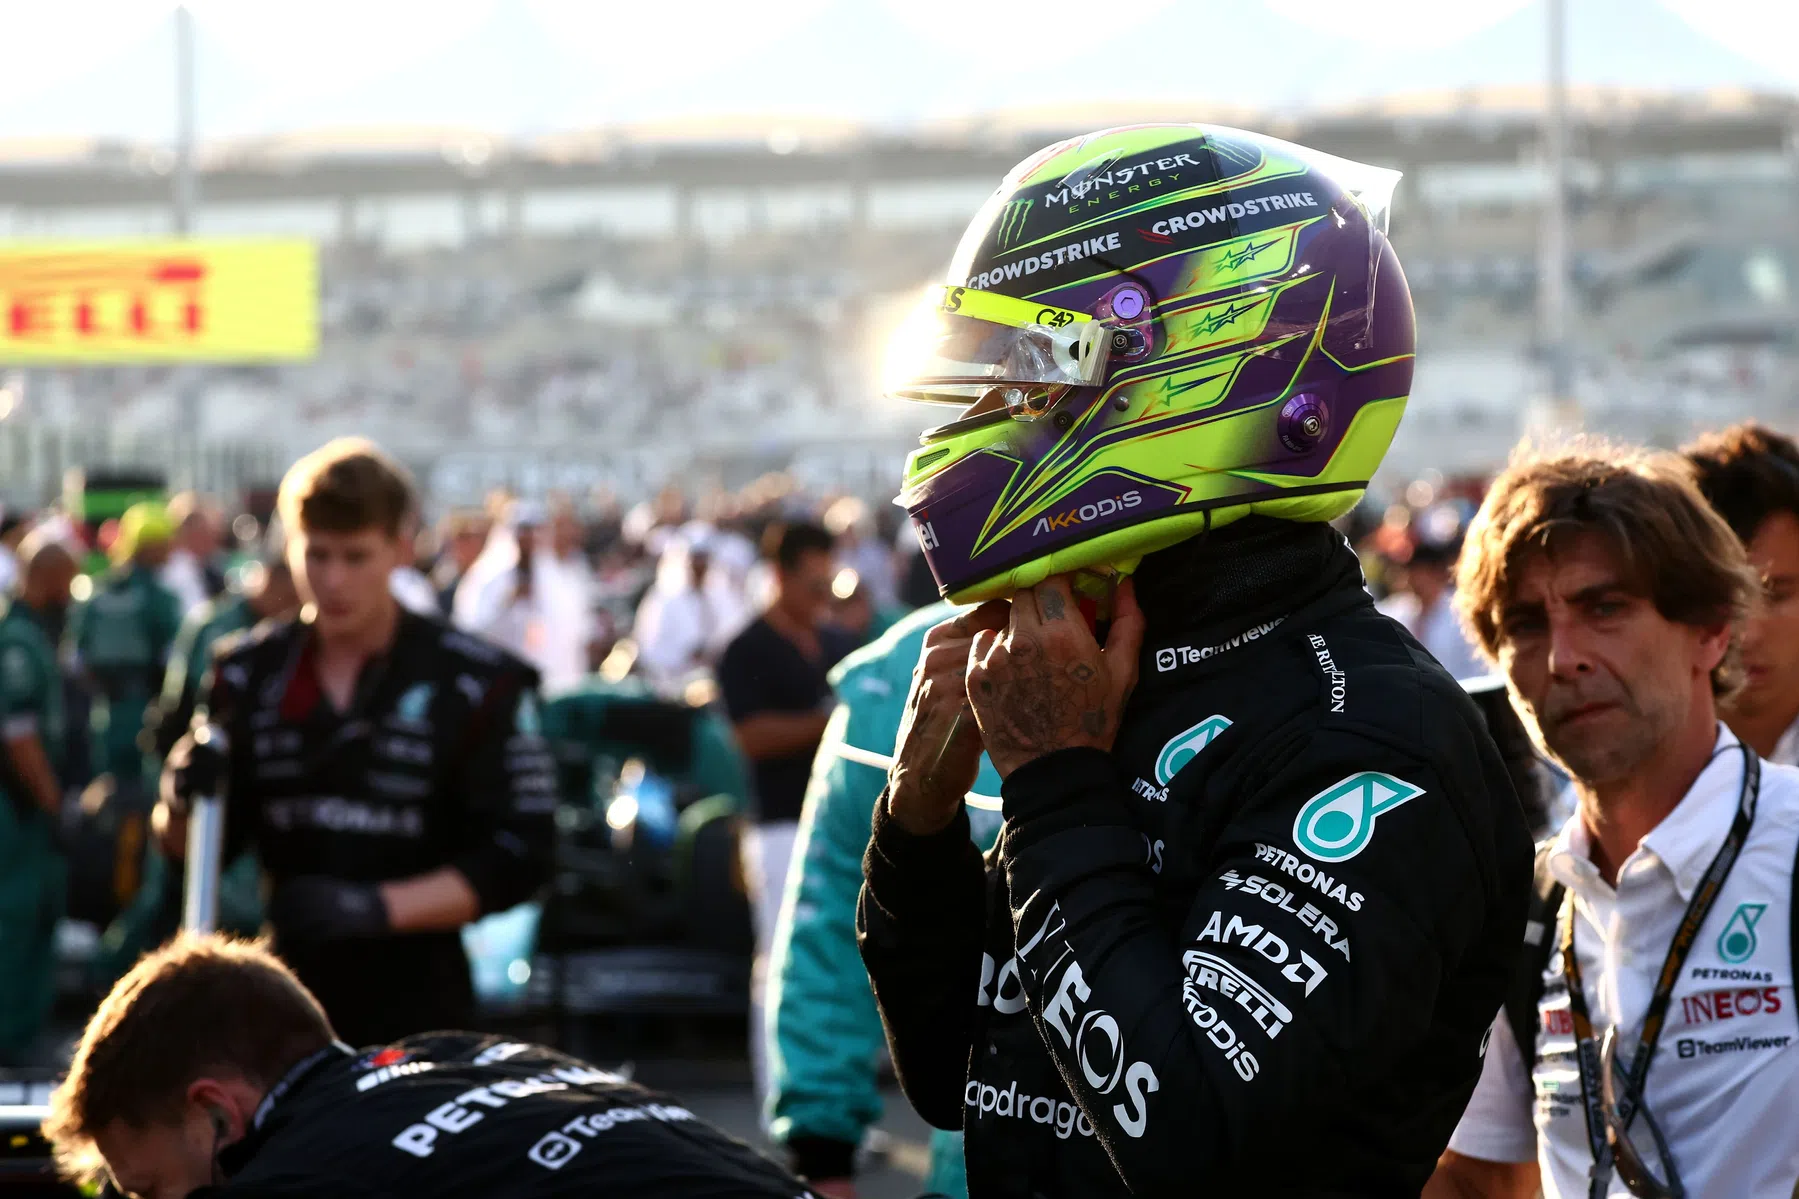 Lewis Hamilton laat beker achter bij FIA gala